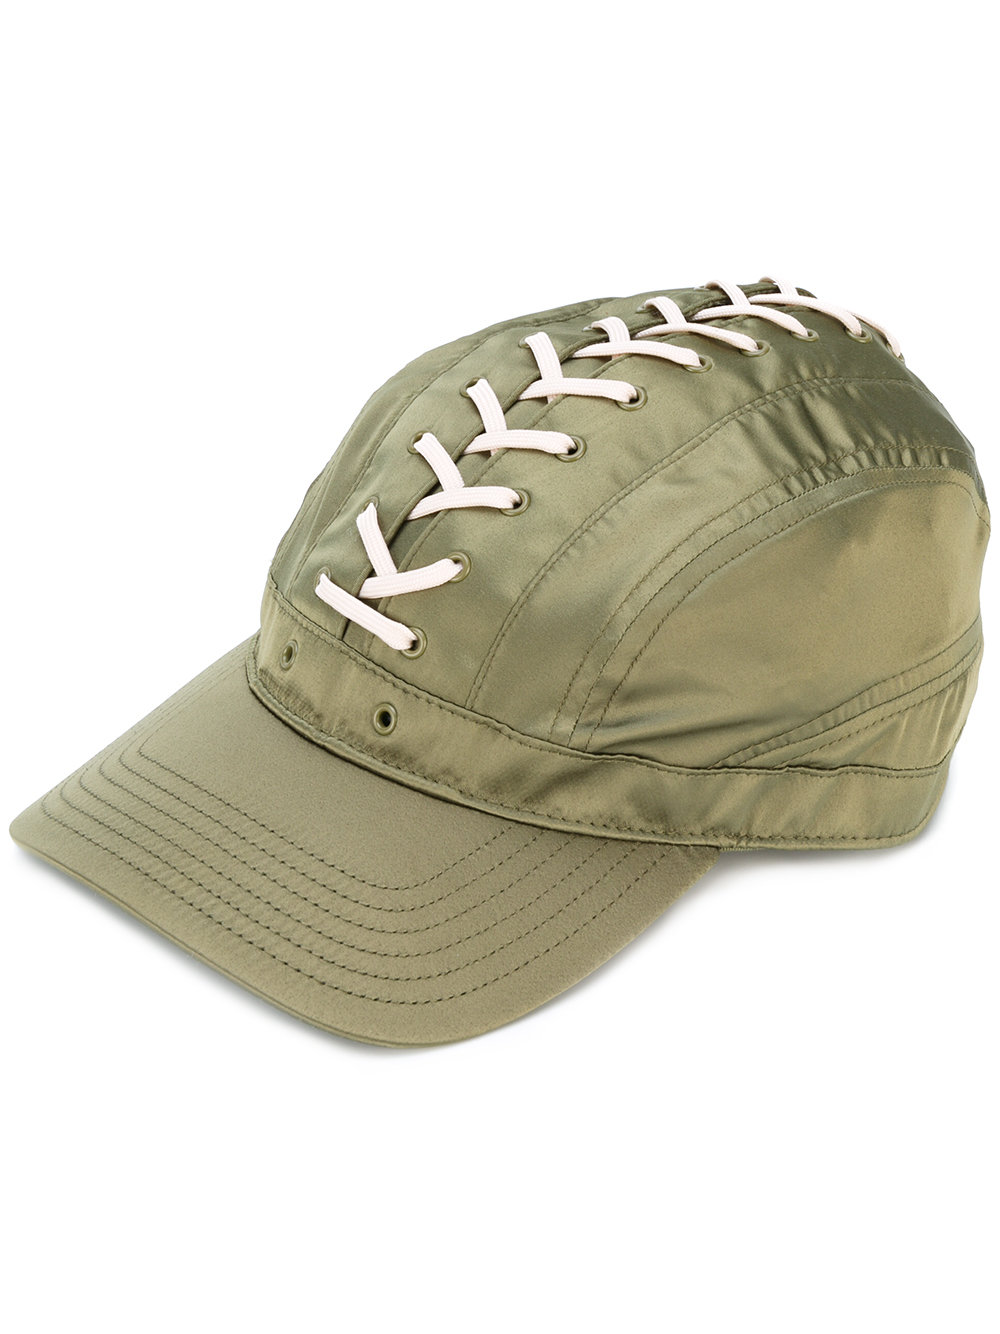 Lace-up cap, Fenty X Puma, $87